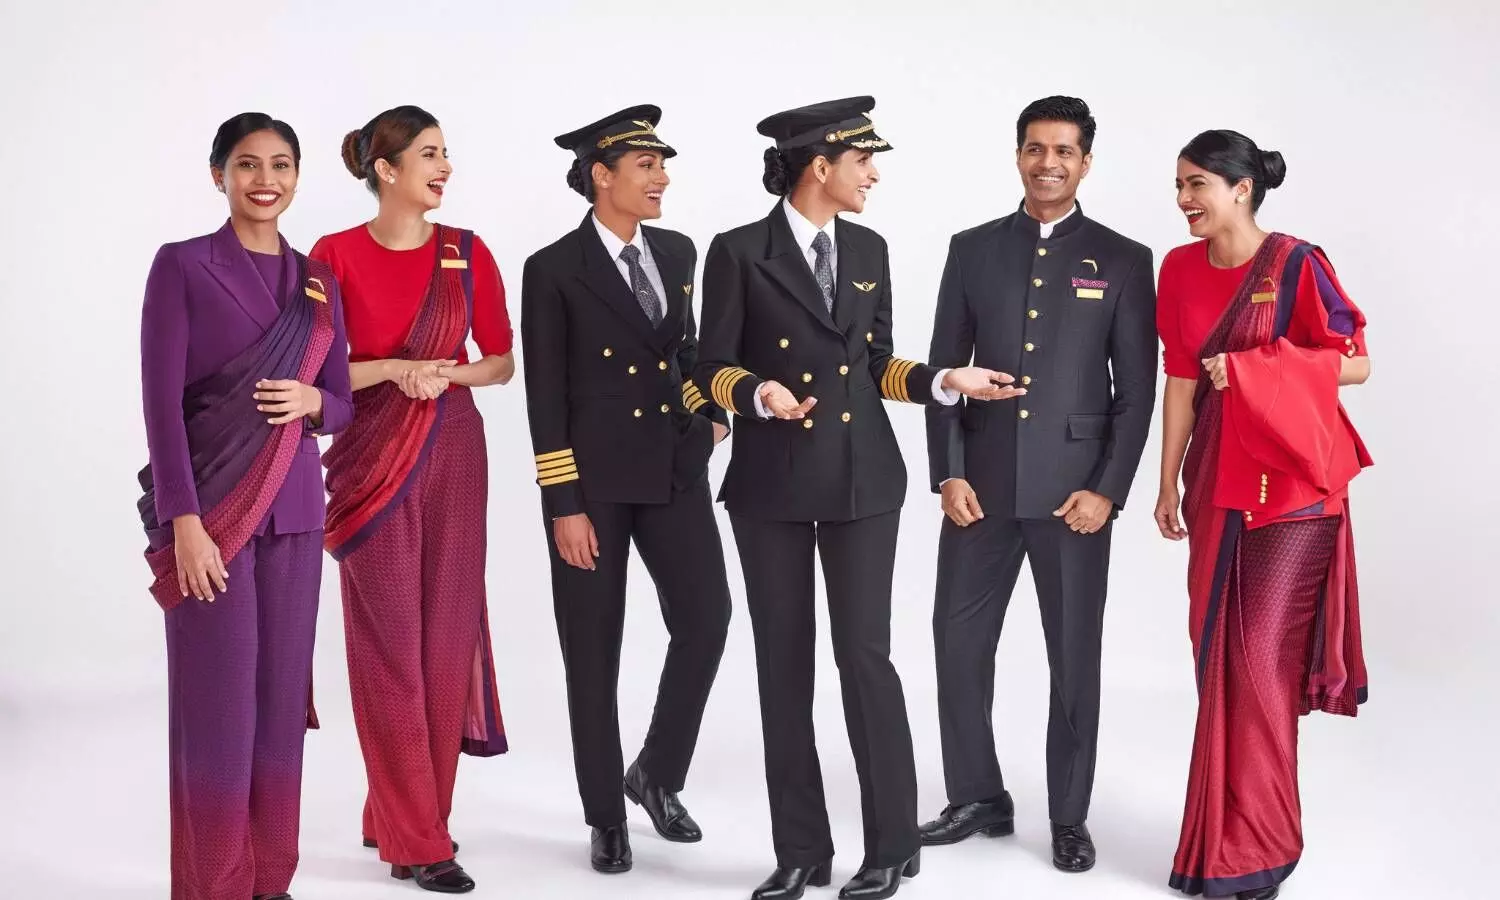 Air India Pilots & Cabin crews in new uniforms